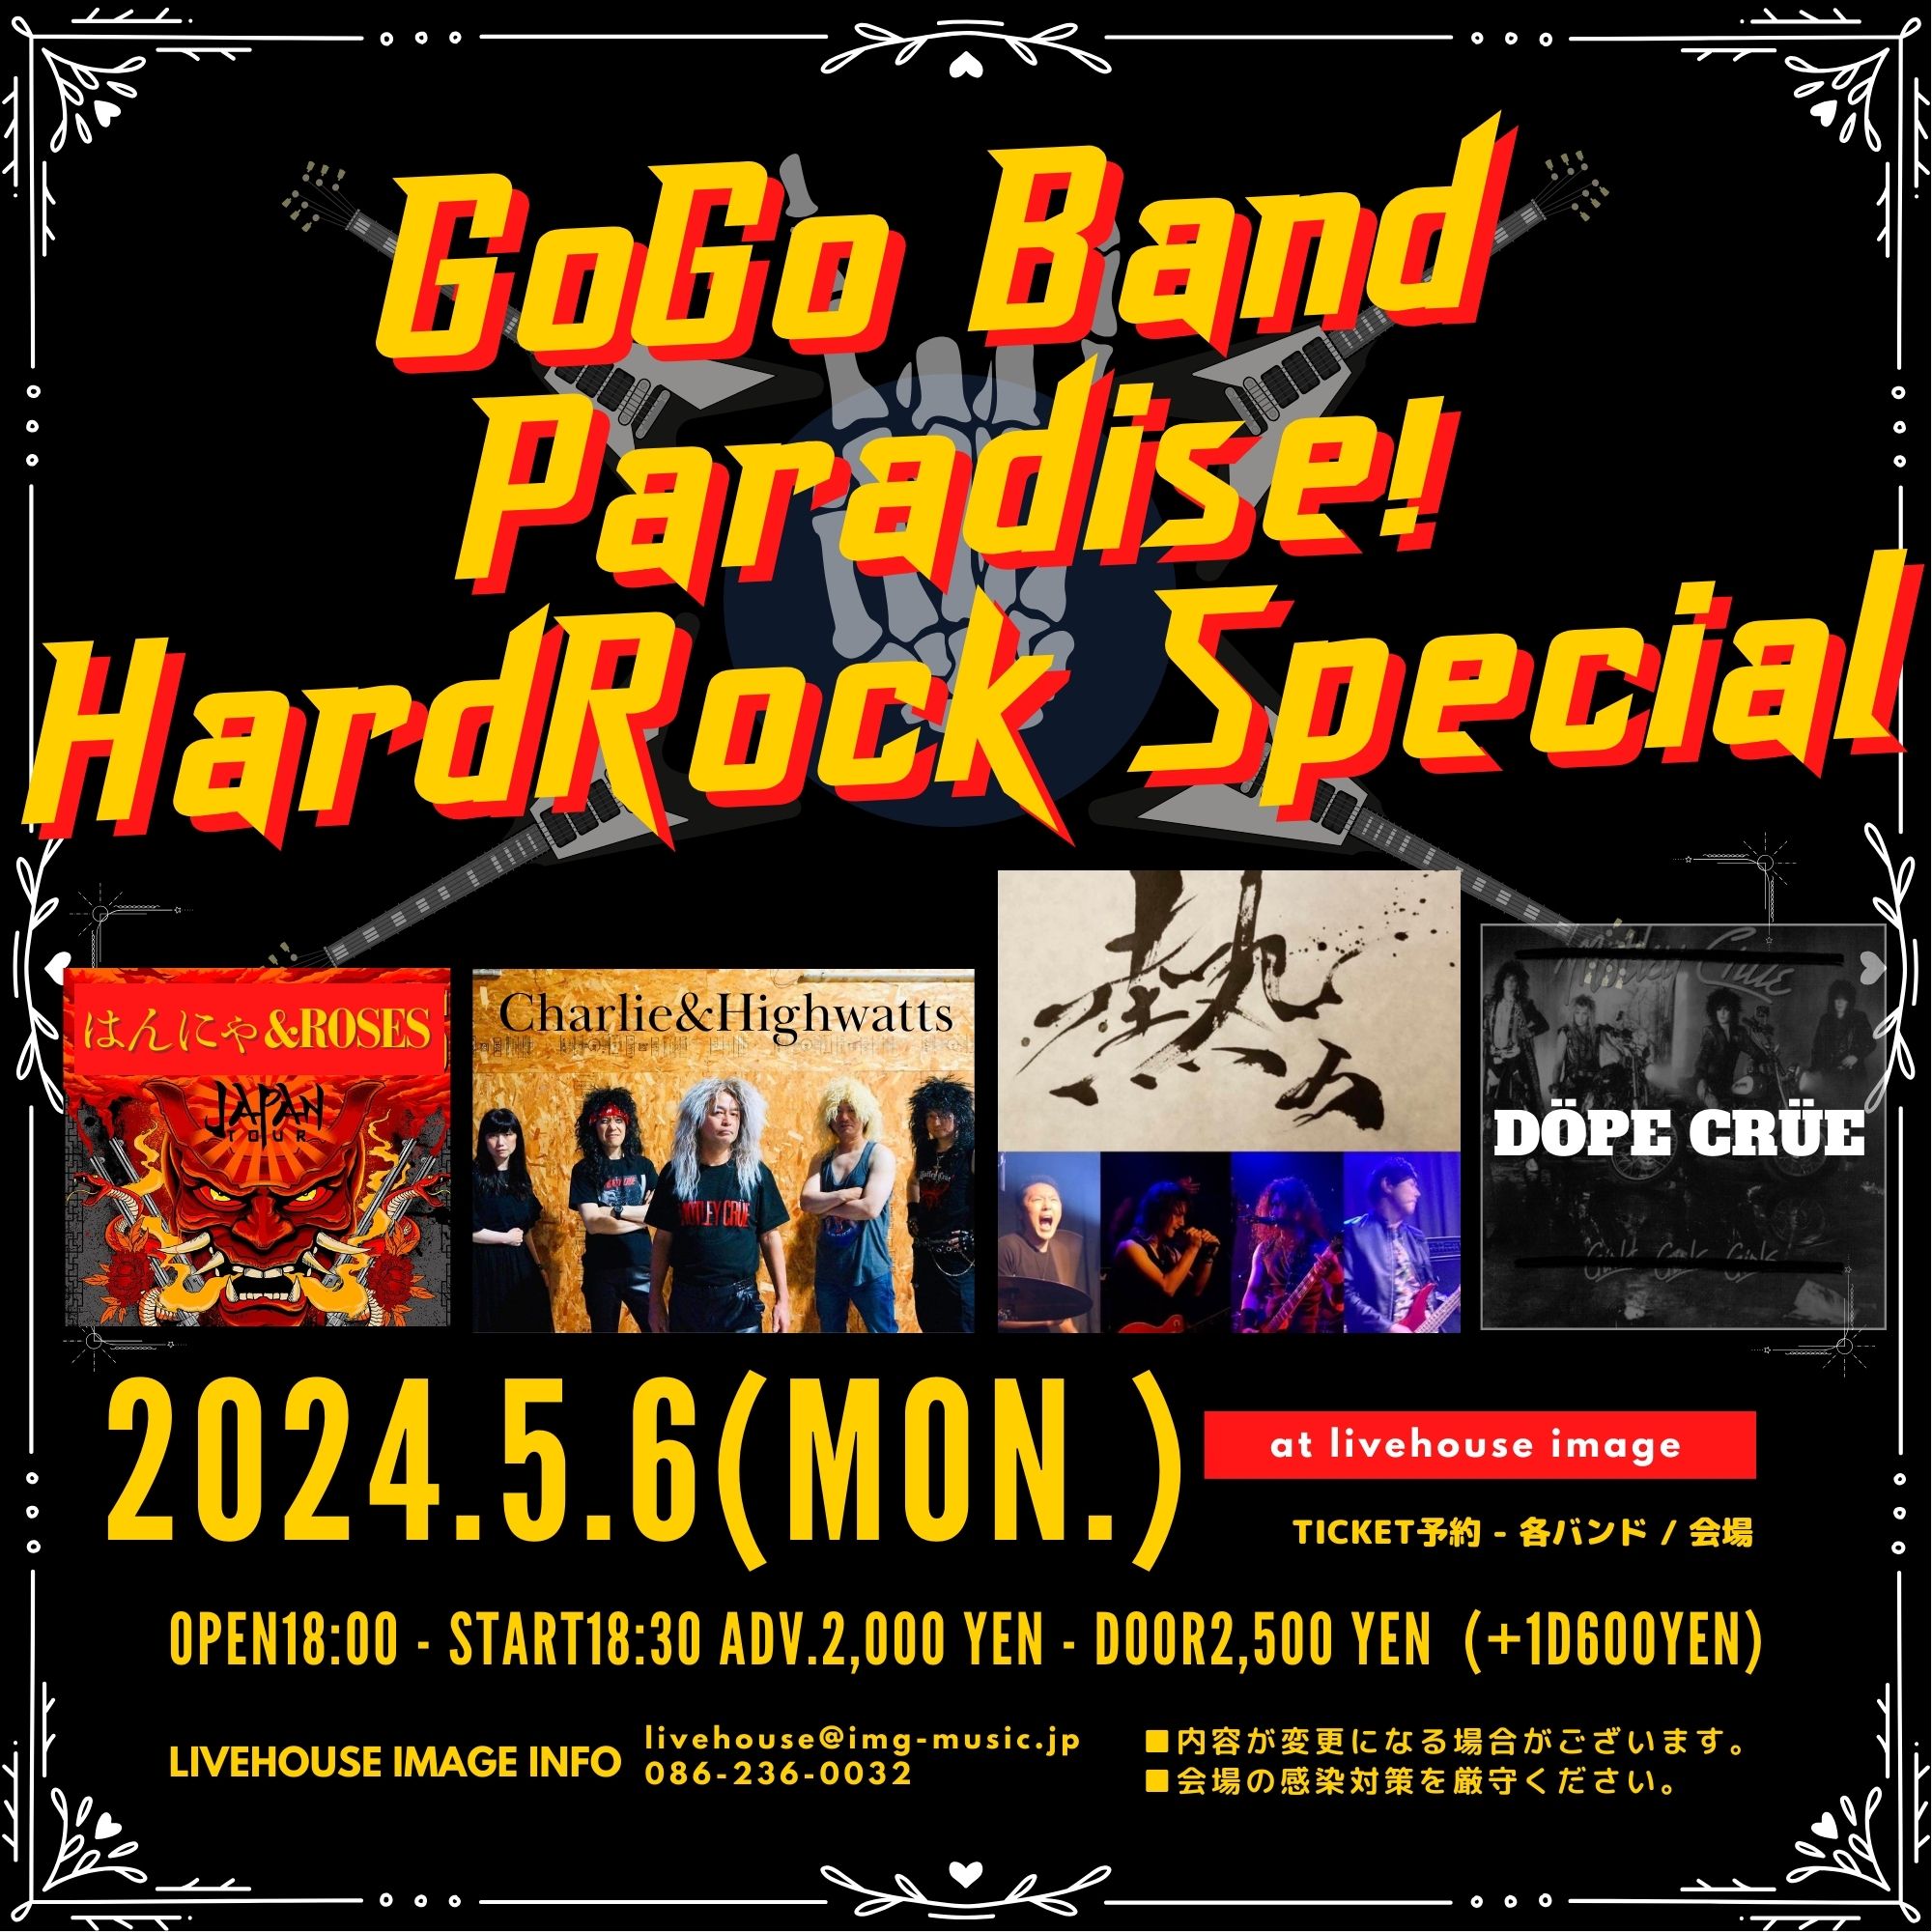 Go Go Band Paradise "HardRock Special"